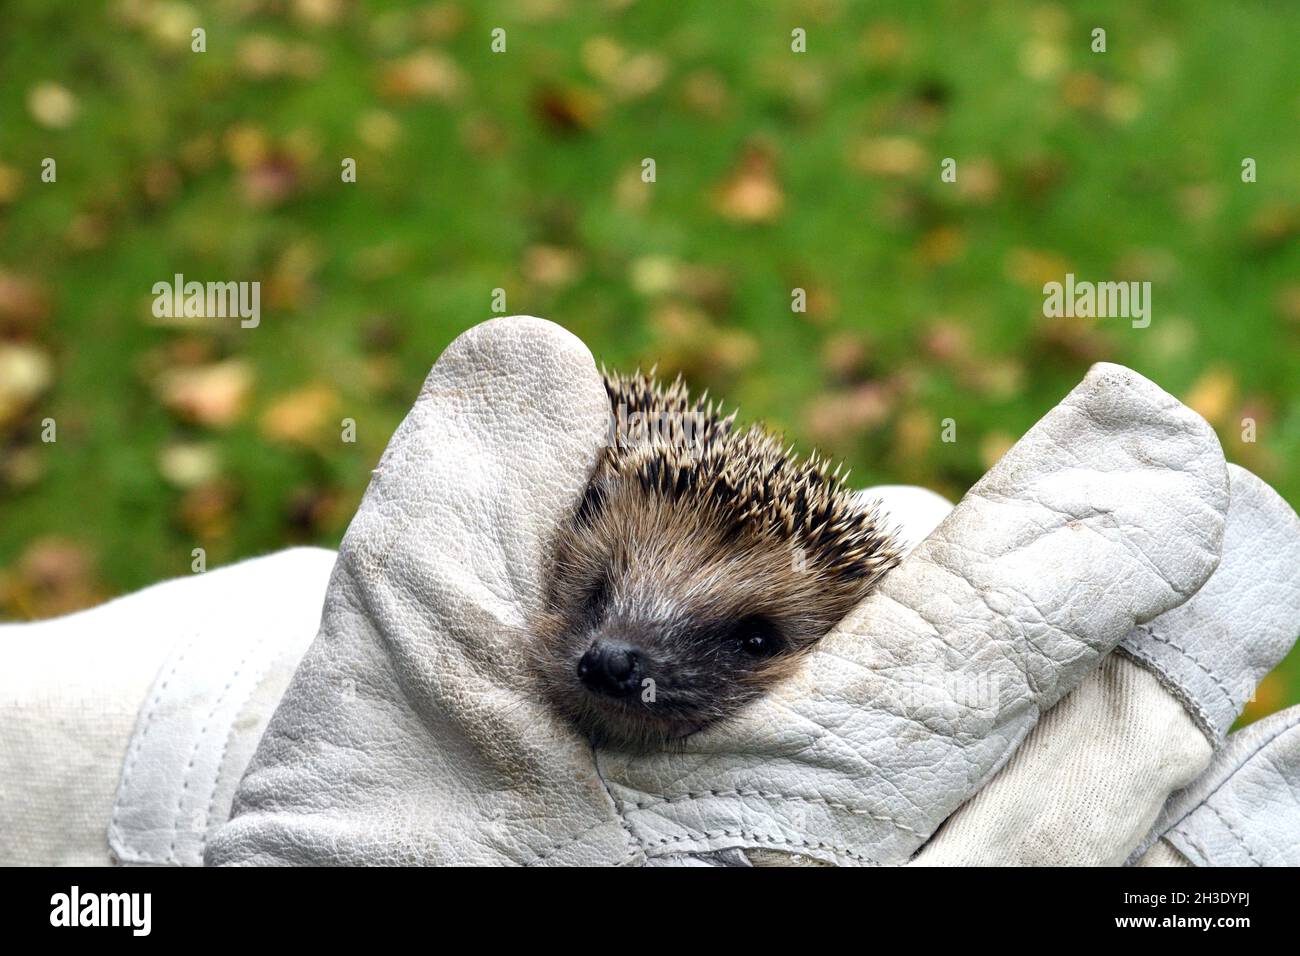 Hedgehog occidentale, hedgehog europeo (Erinaceus europaeus), in mani guanti, salvataggio di animali, Germania Foto Stock